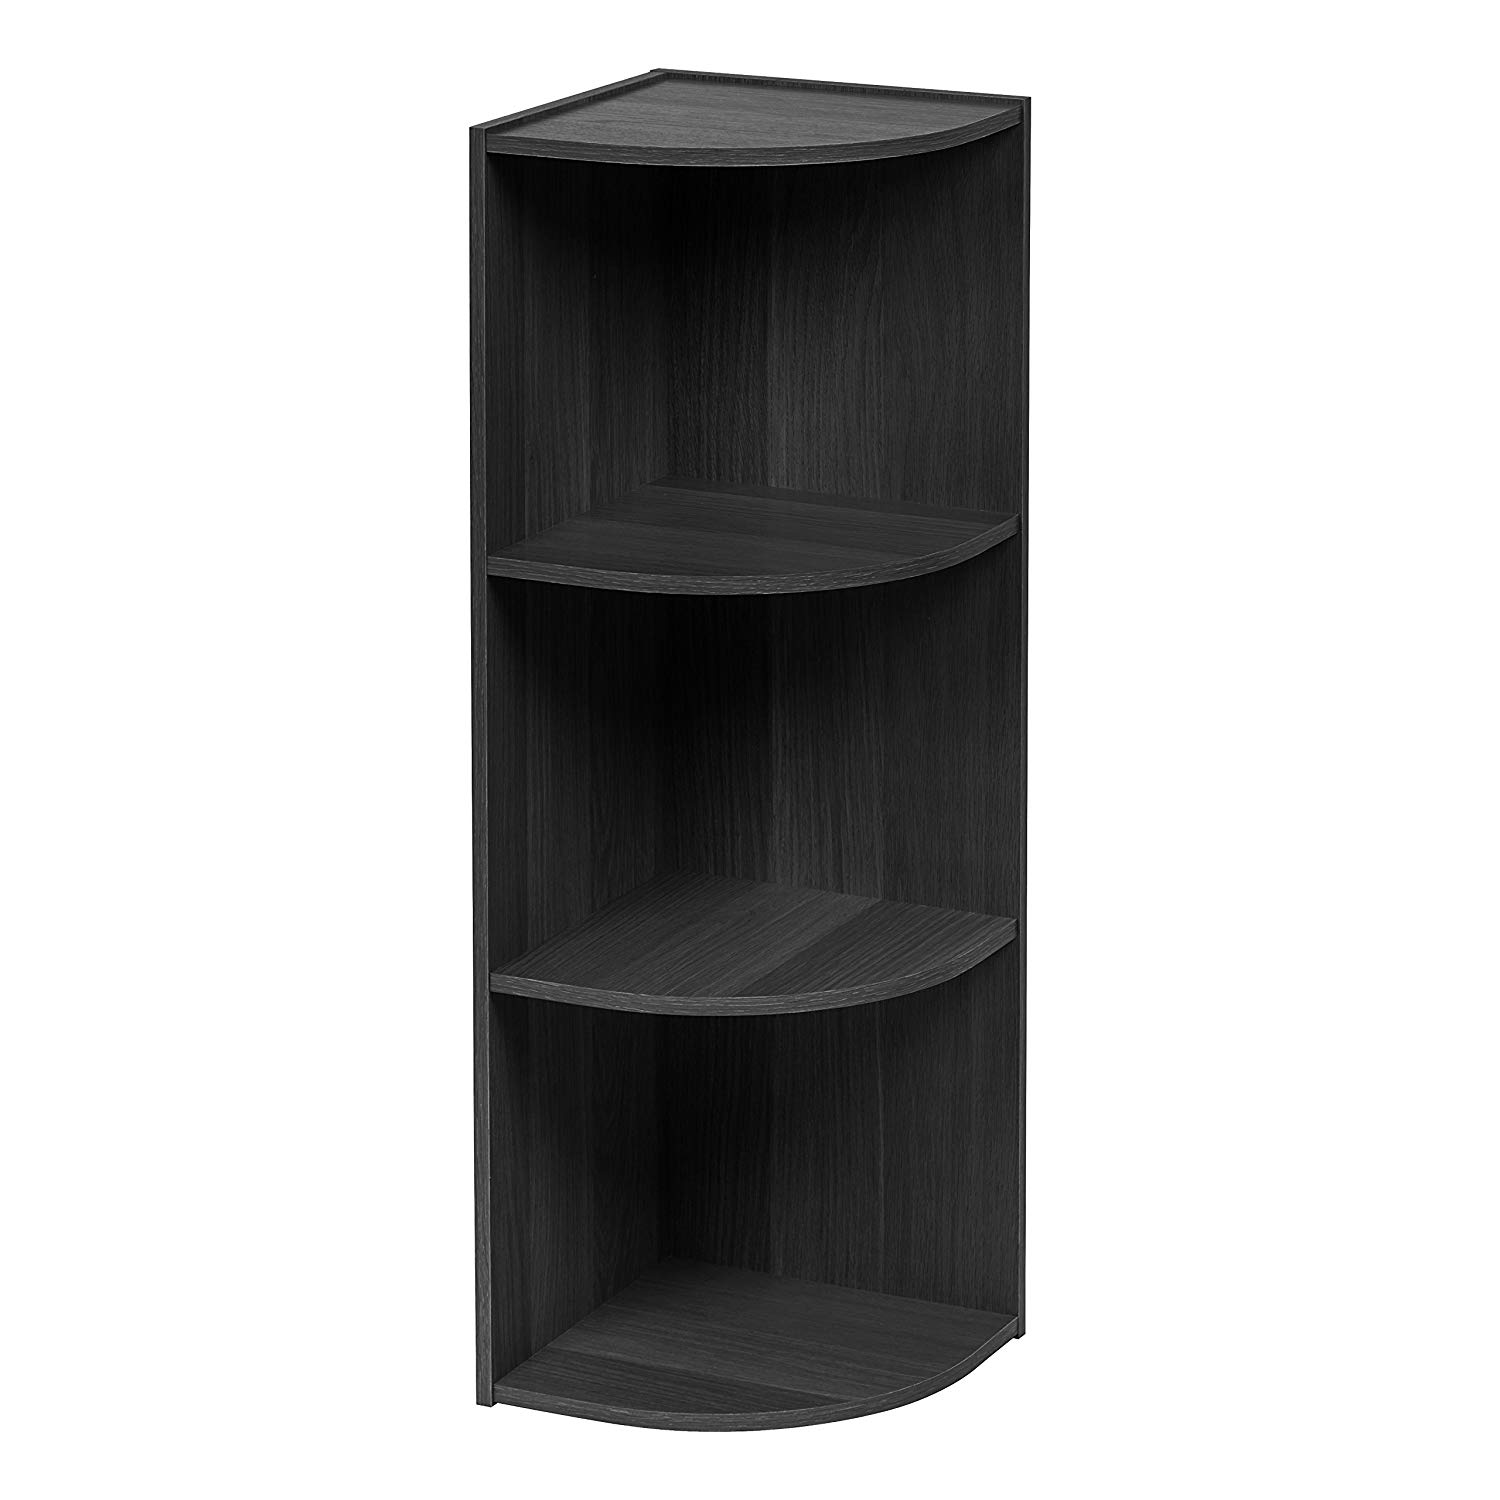 IRIS 3-Tier Corner Curved Shelf Organizer, Black